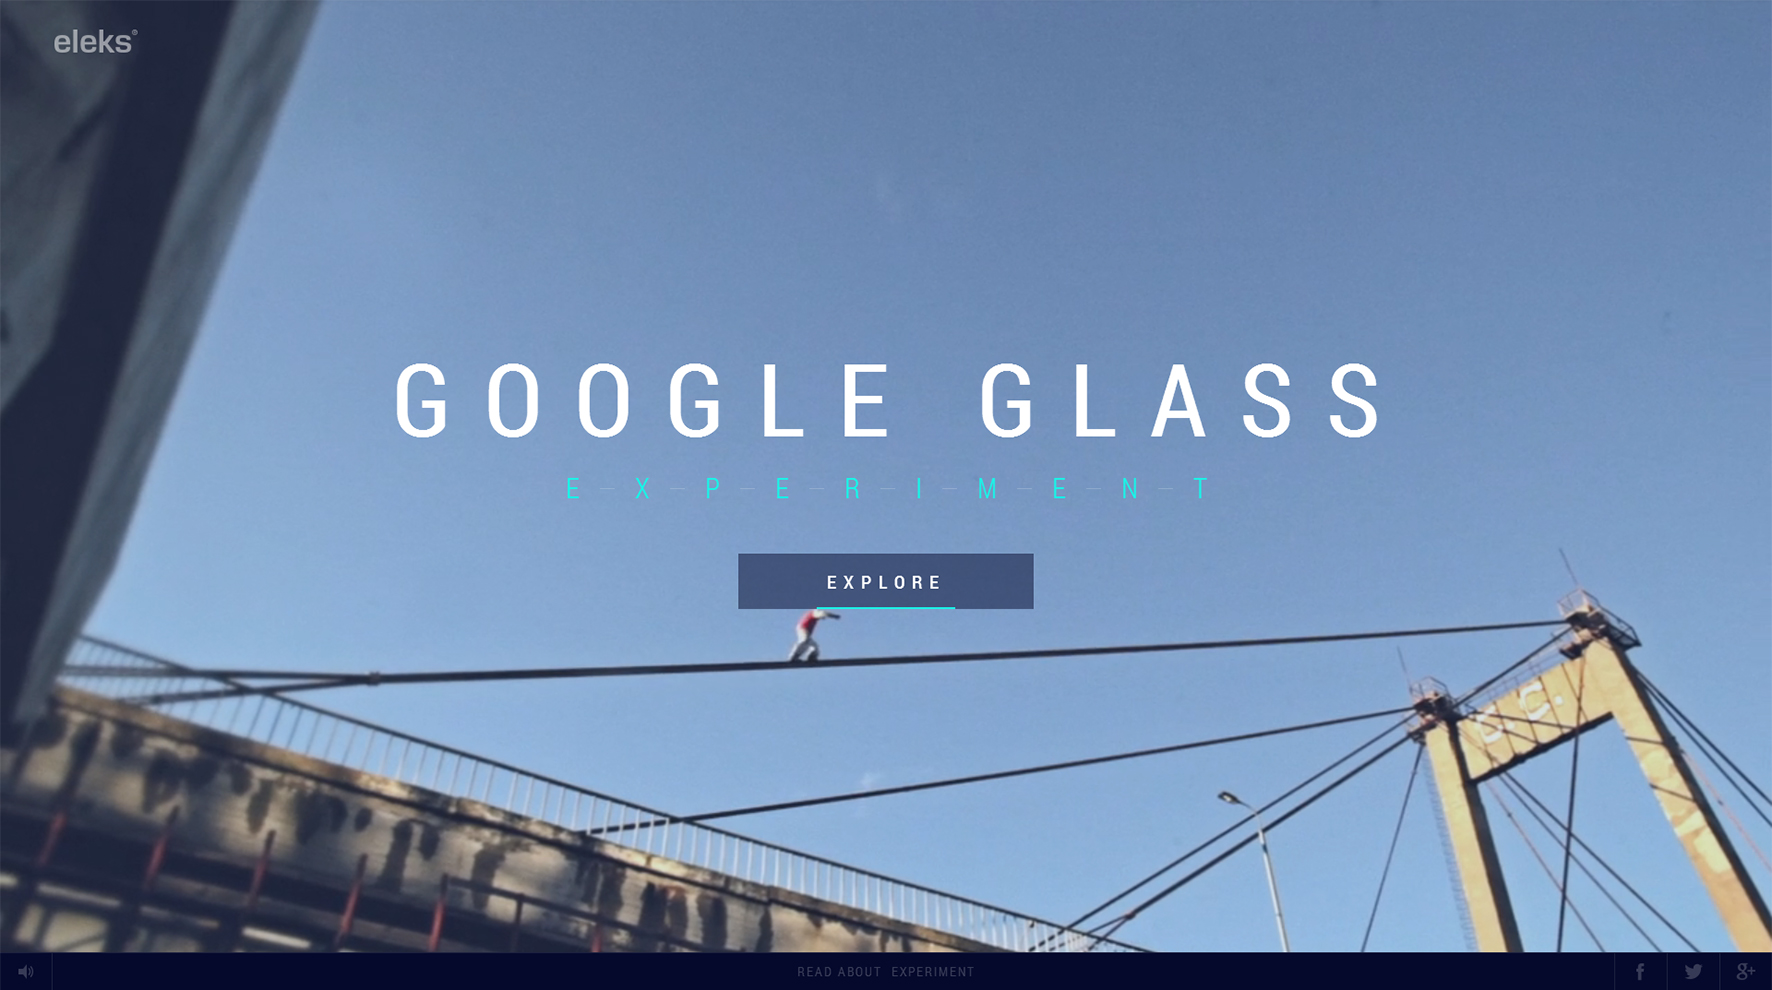 Eleks Google Glass Experiment